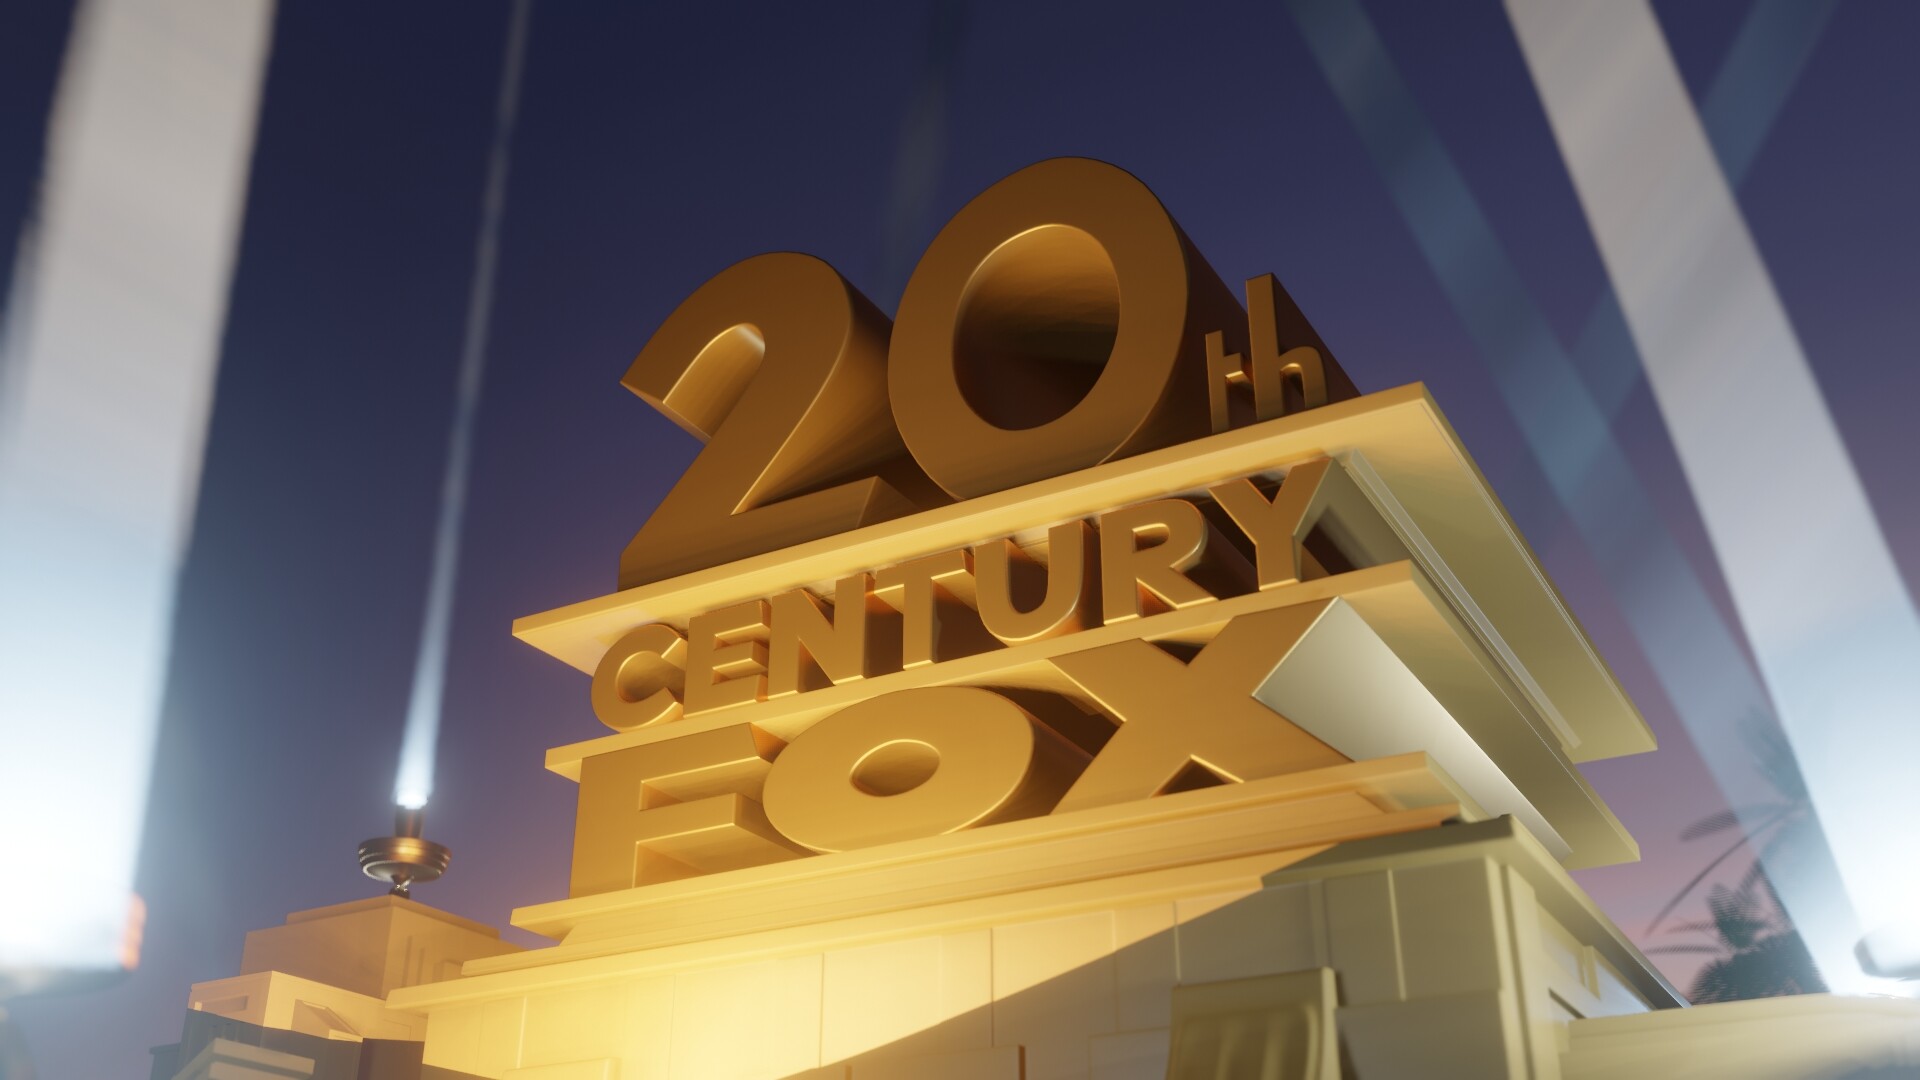 ArtStation - 20th Century Fox Animated Logo / Анимированная заставка 20th  Century Fox